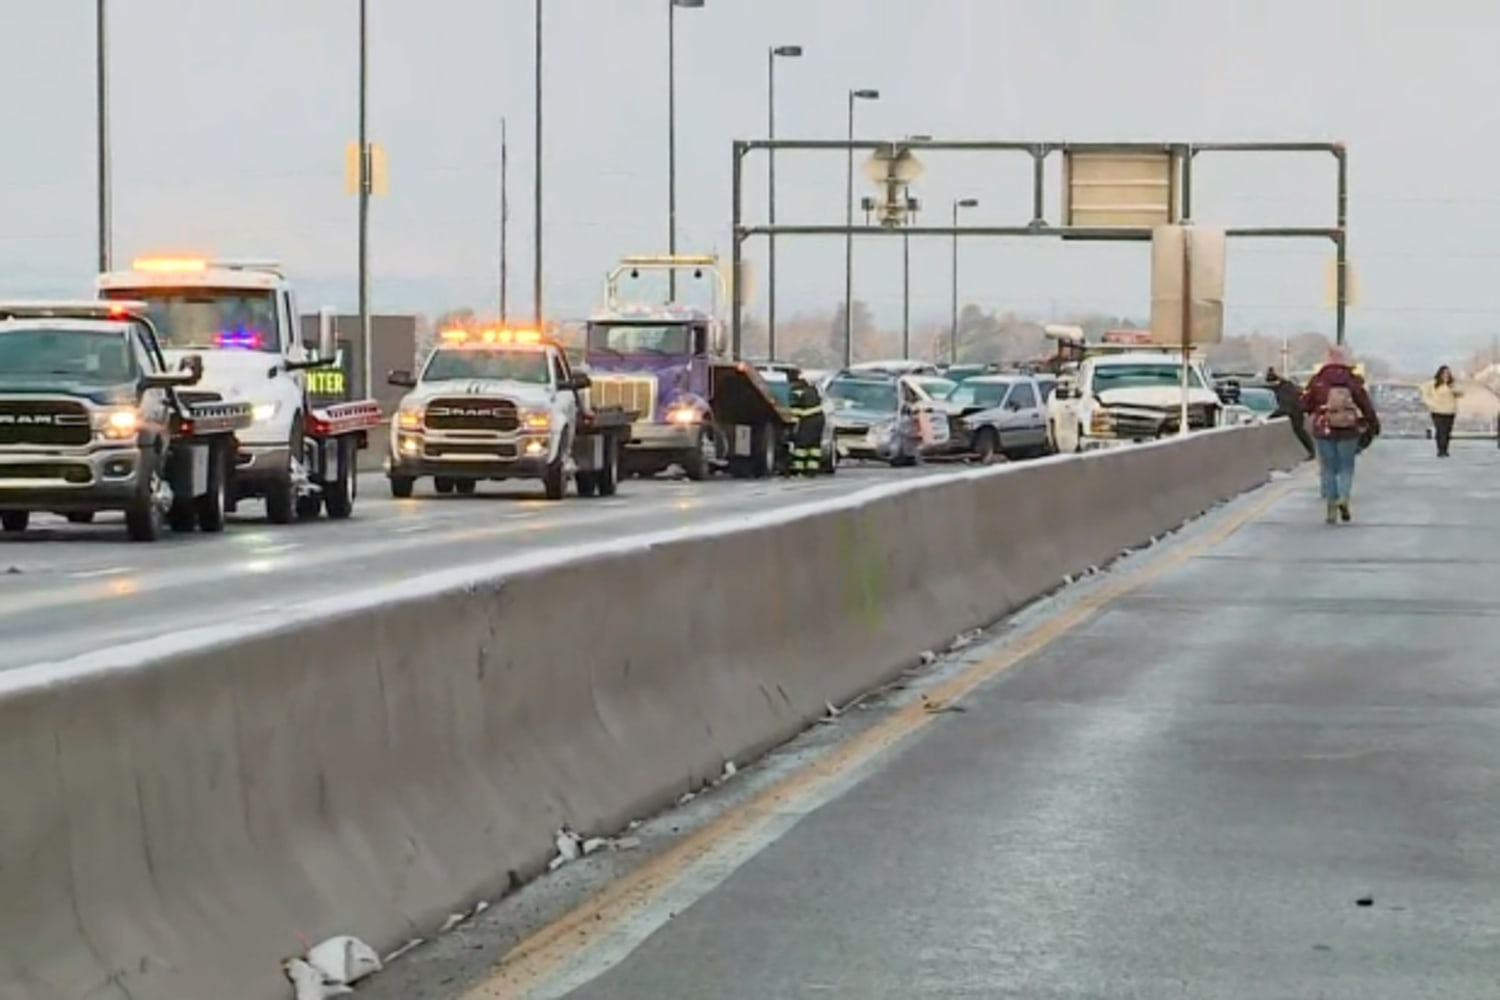 100-vehicle crash closes parts of Denver highway